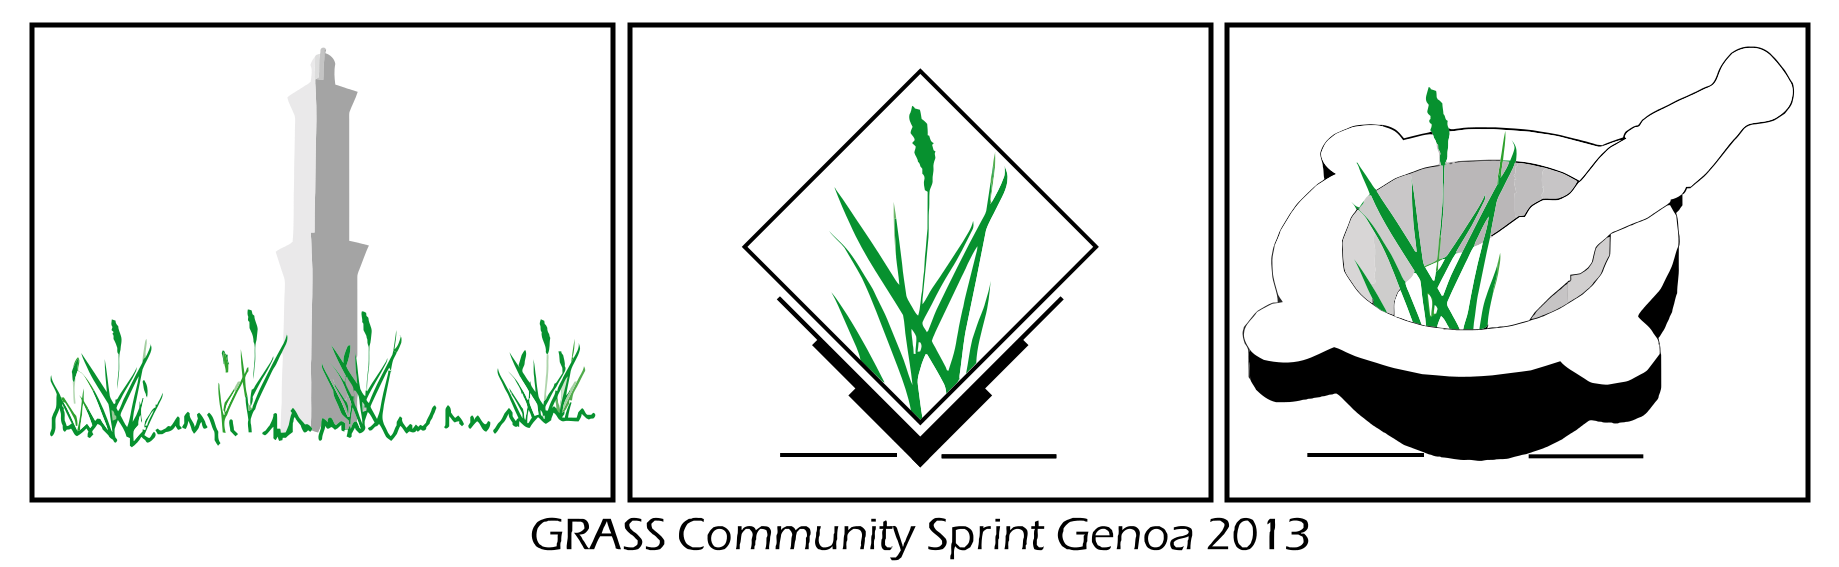 File:Community sprint genova2013.png